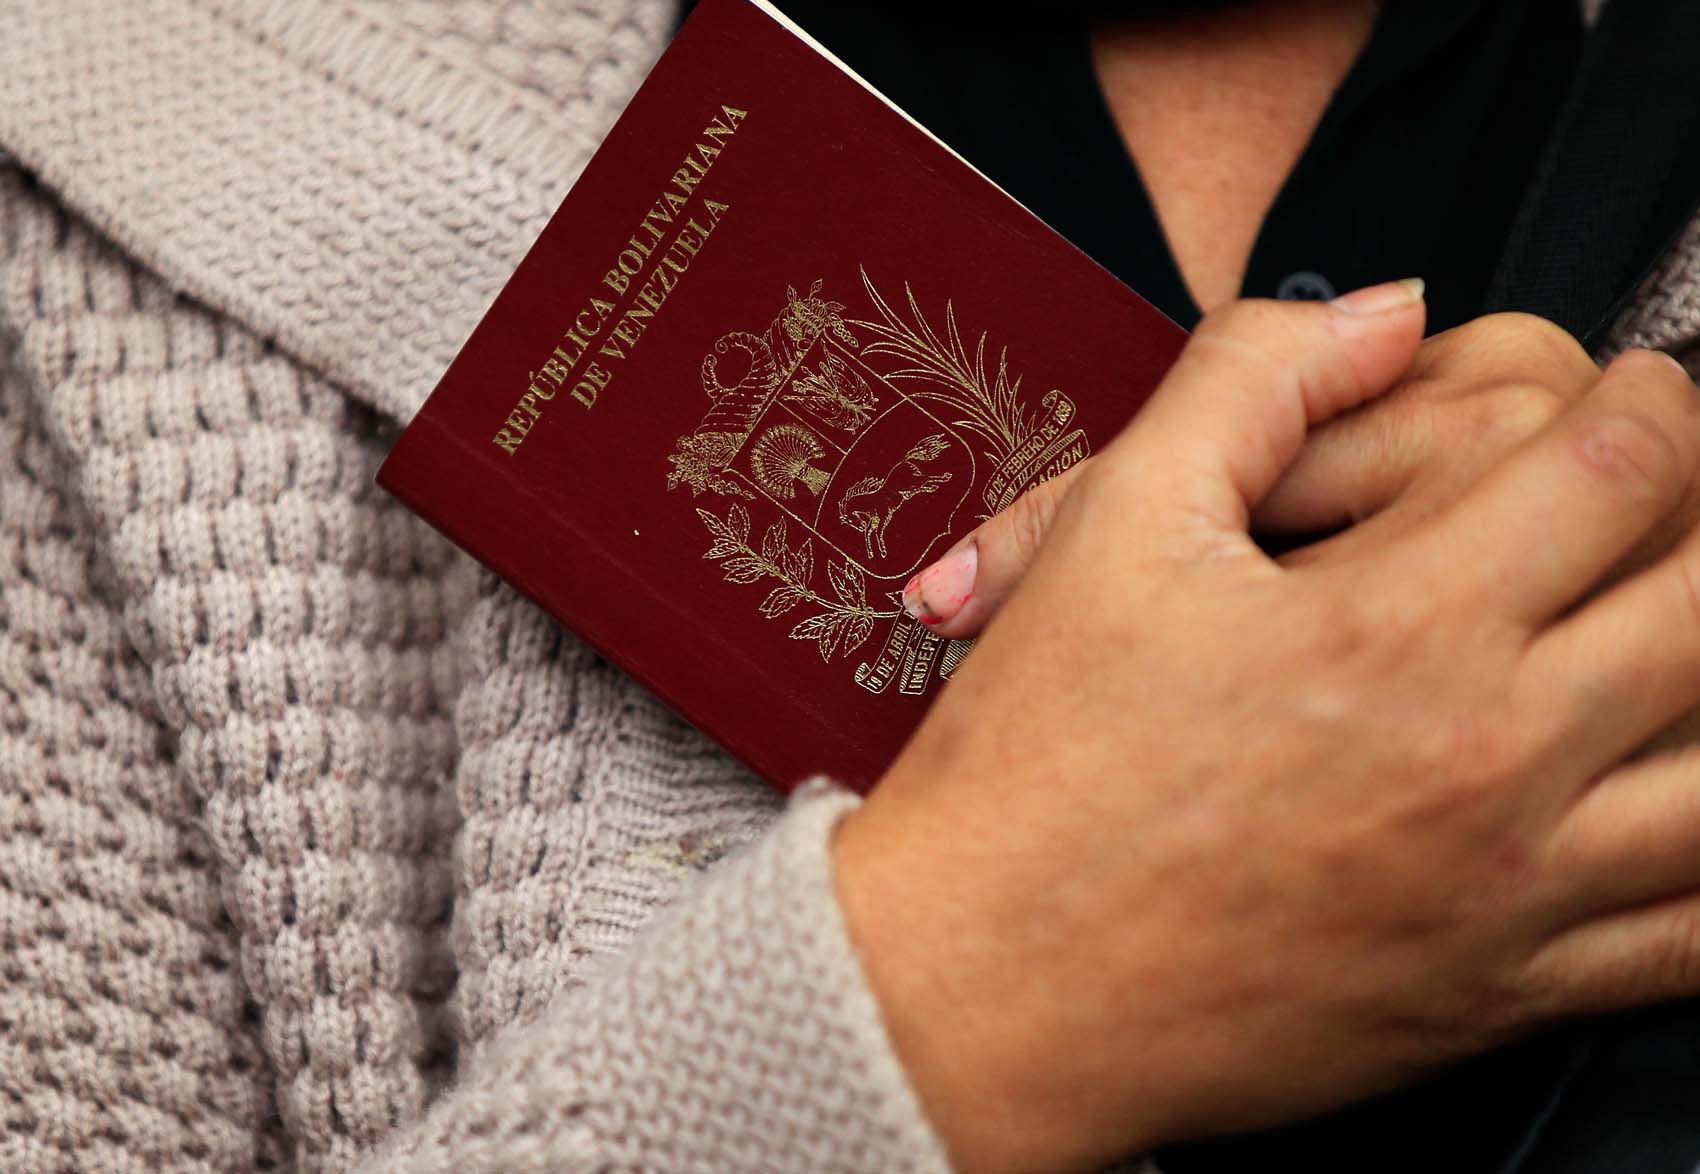 Éxodo sin fin: La odisea de conseguir un pasaporte en Venezuela